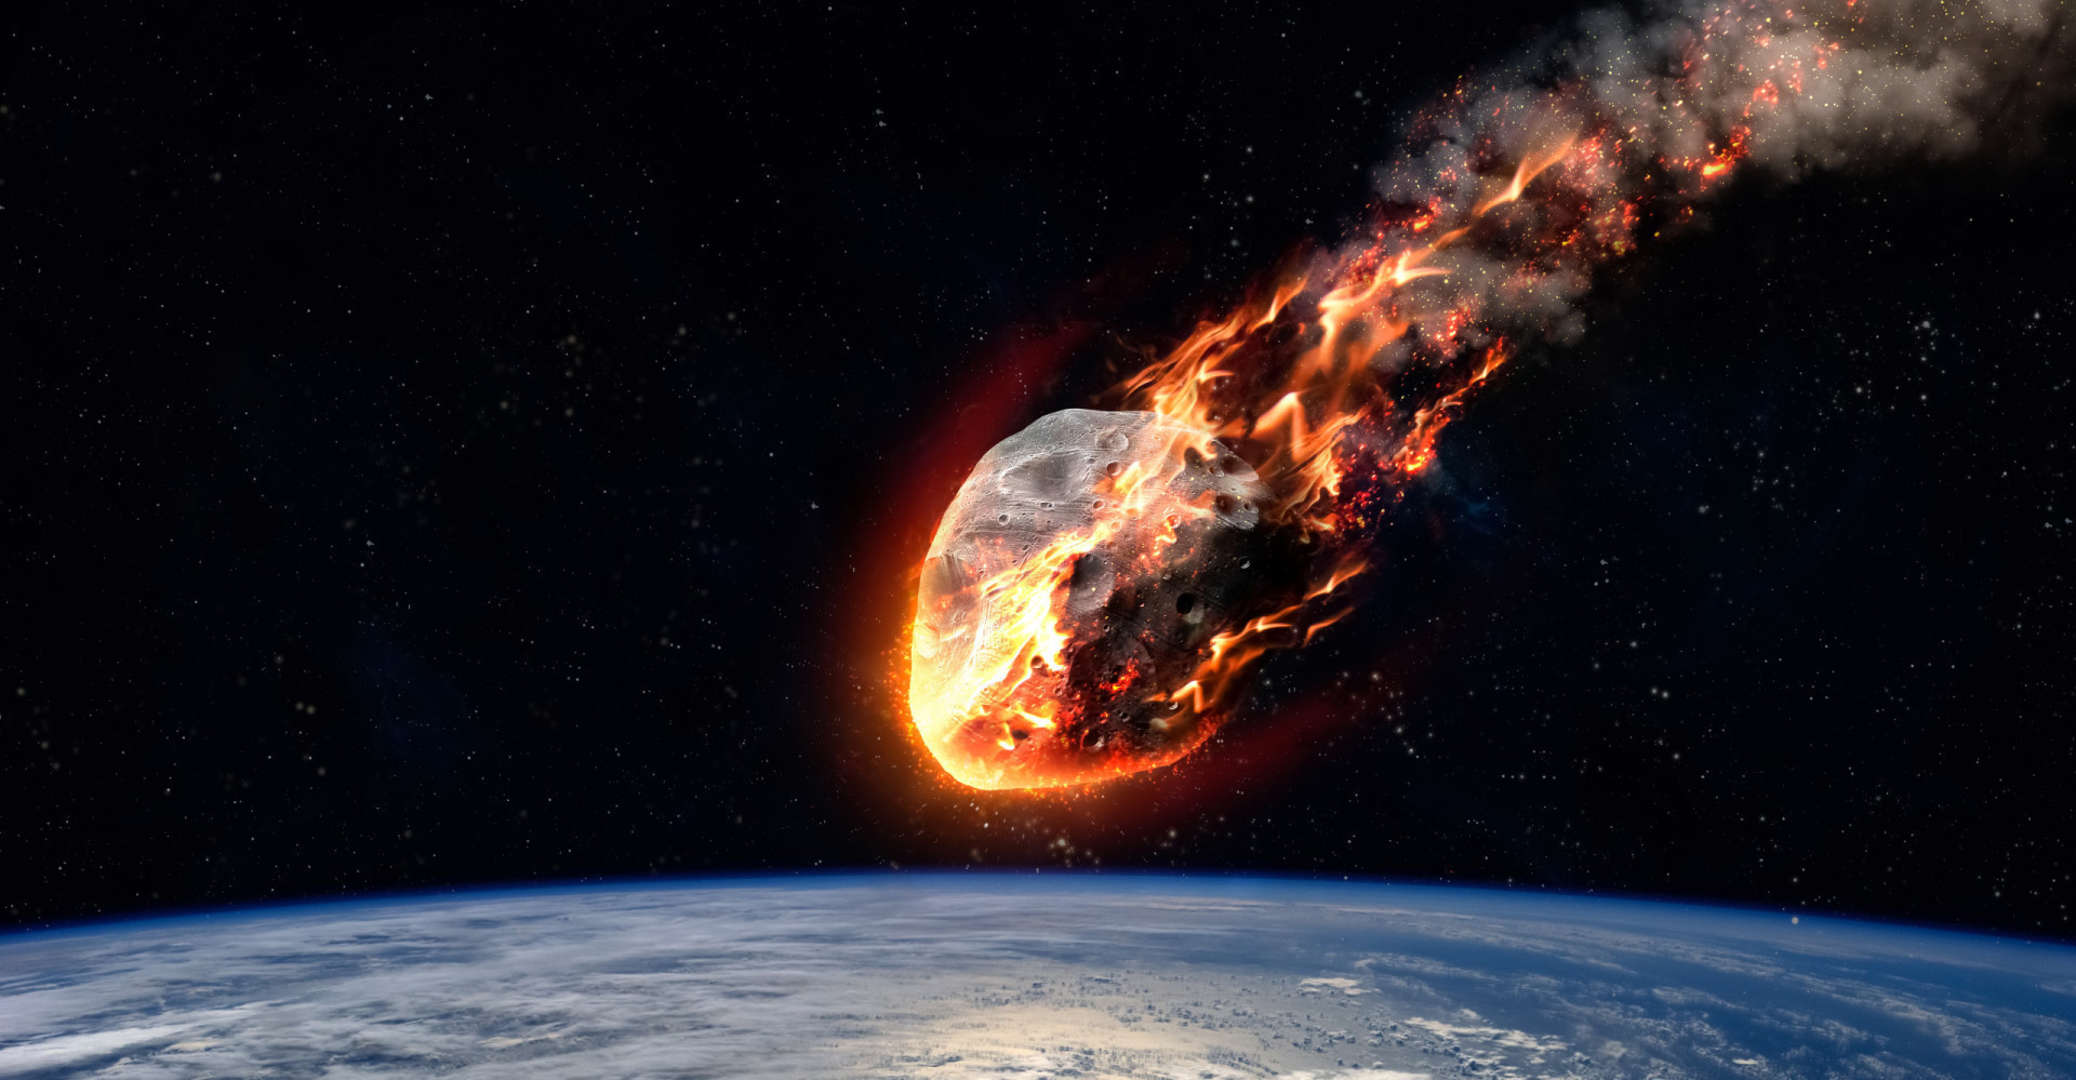 De asteroïde die de aarde zal raken heet Bennu